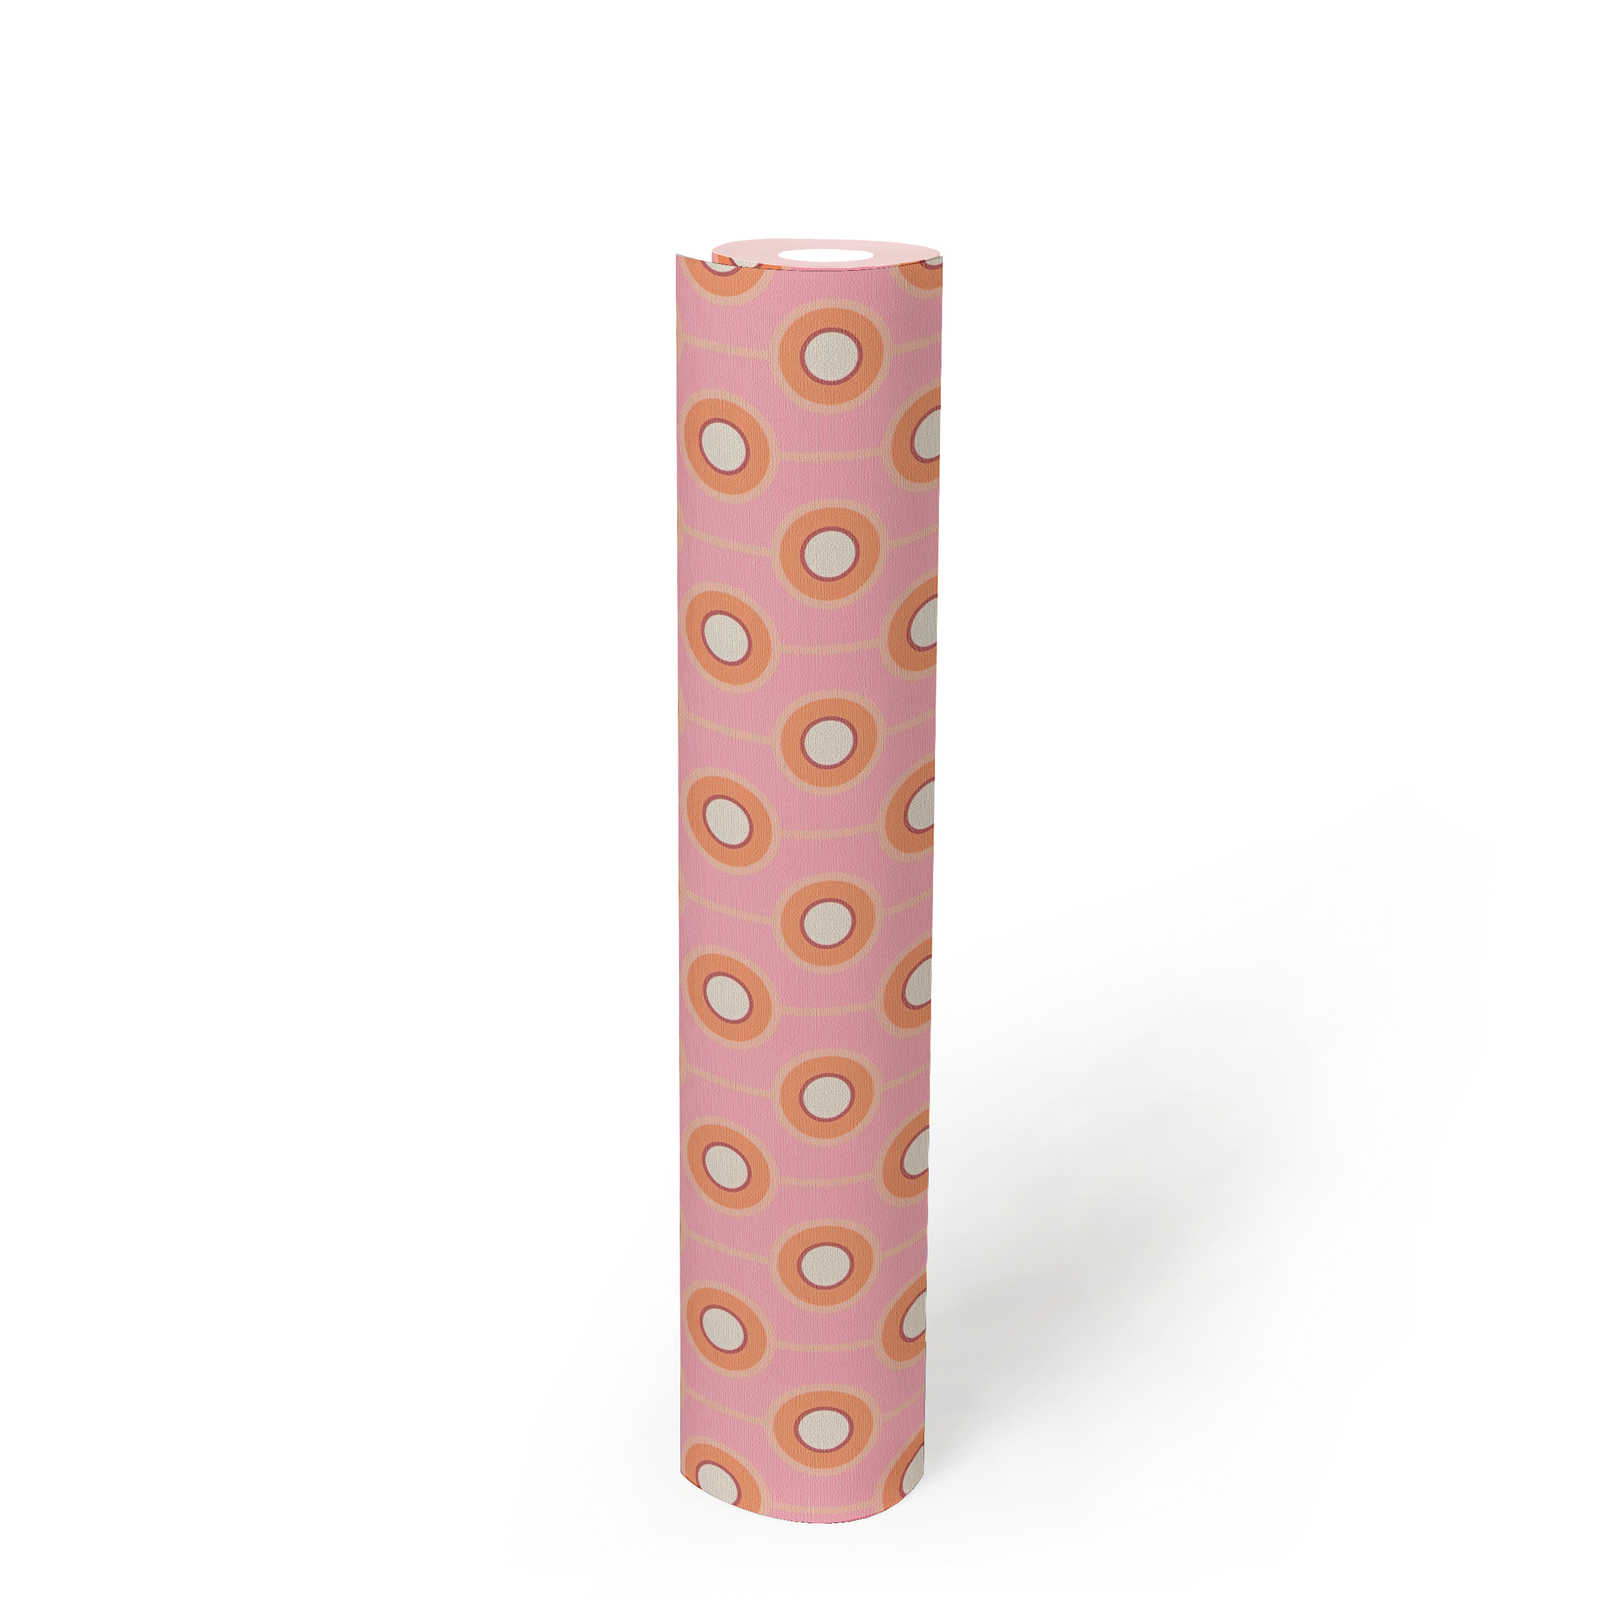             Papel pintado ligeramente texturizado con motivos circulares - rosa, naranja, beige
        